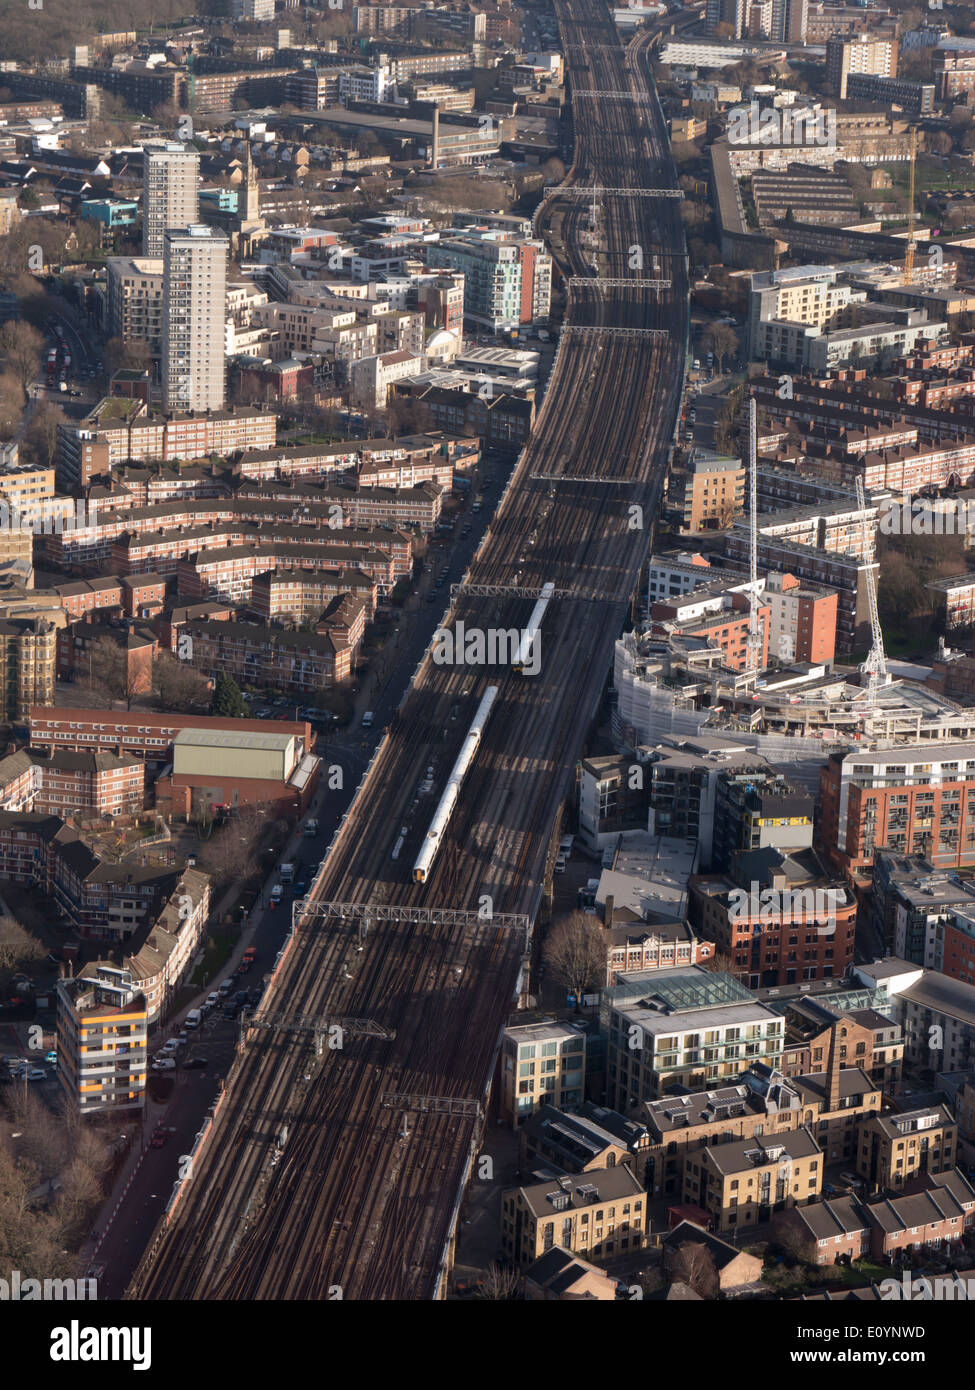 UK, London, south east trains railway Stock Photo